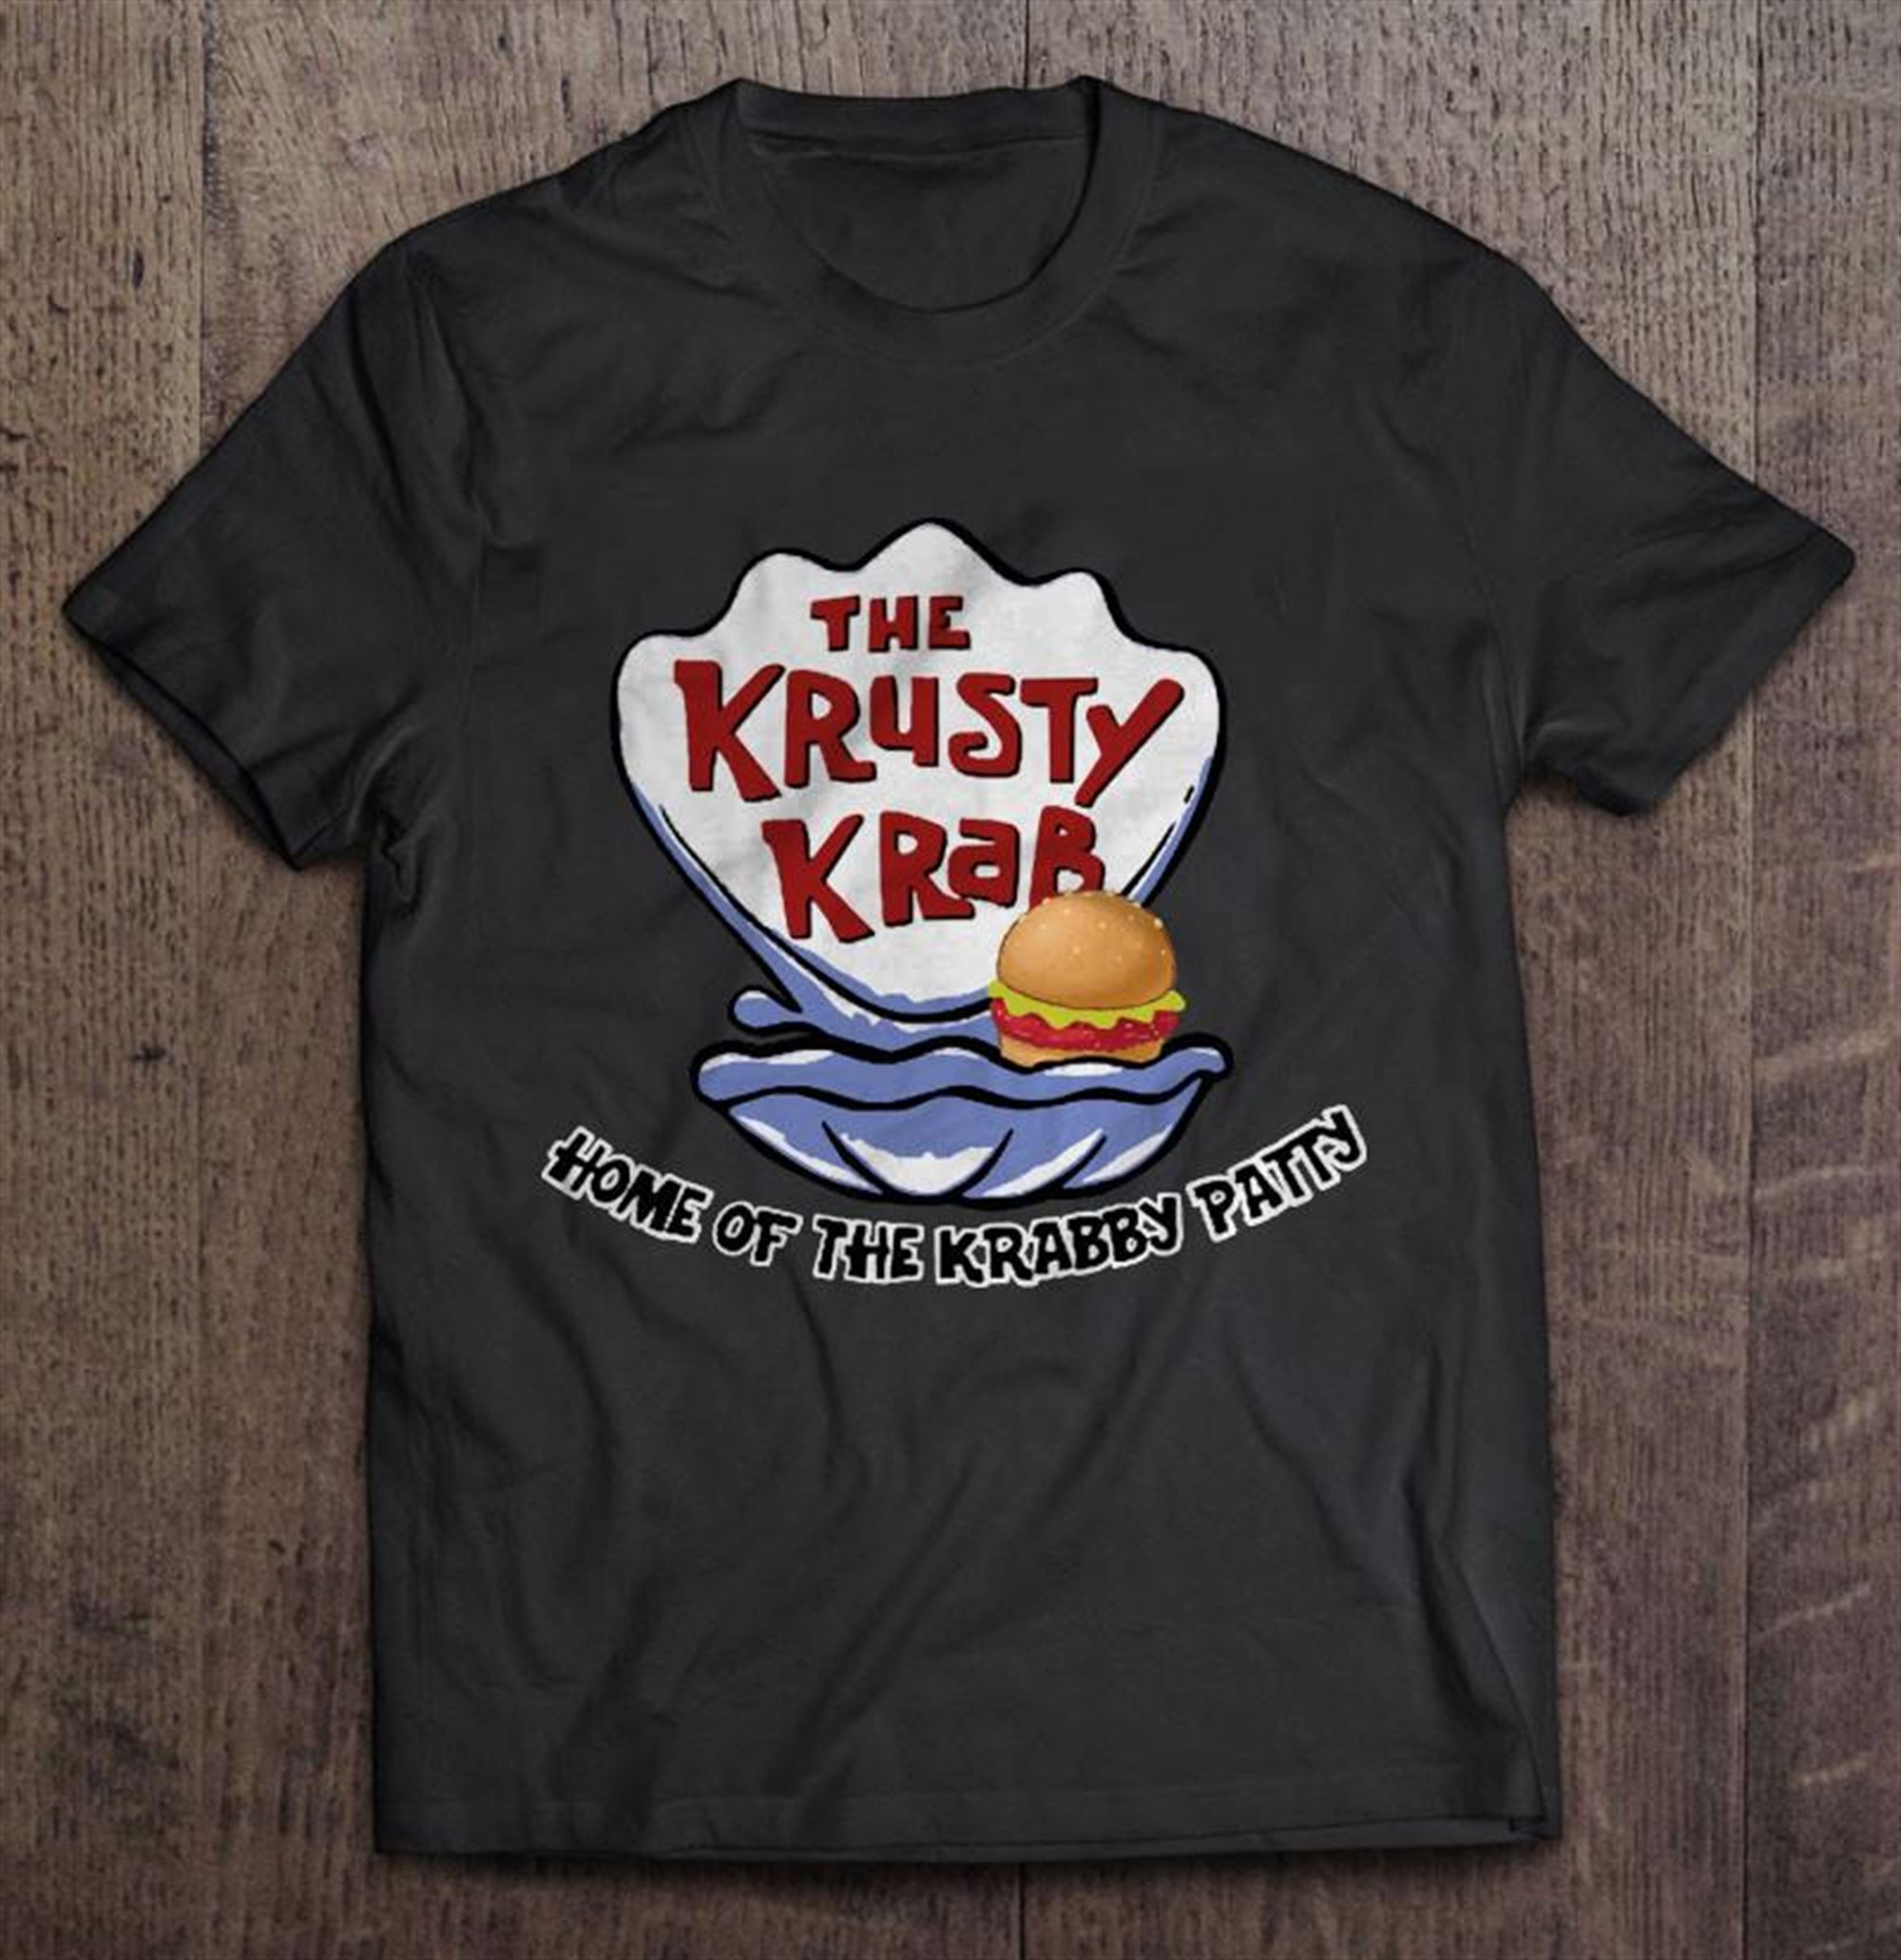 Krusty Krab T-shirt Size Up To 5xl